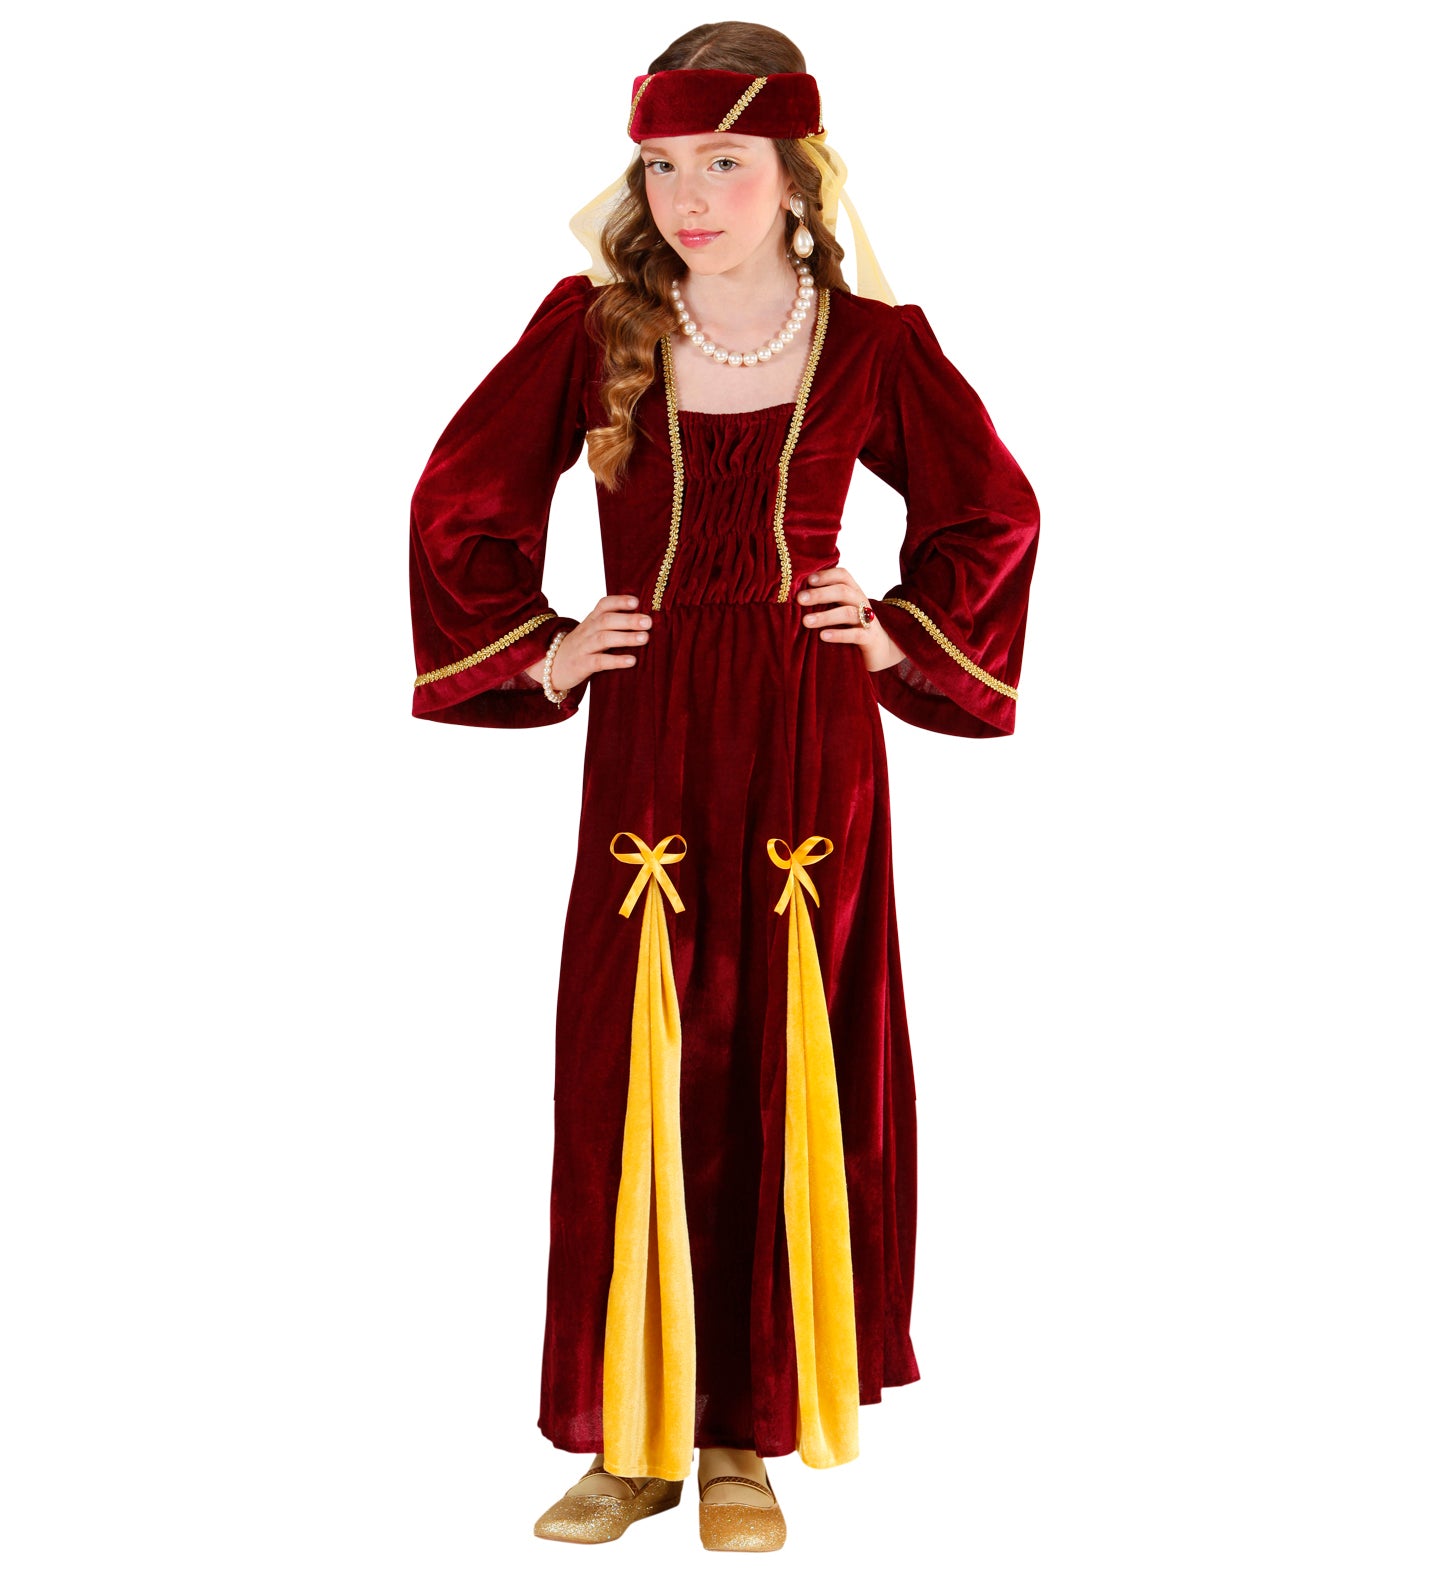 Children's medieval Renaissance Princess dress